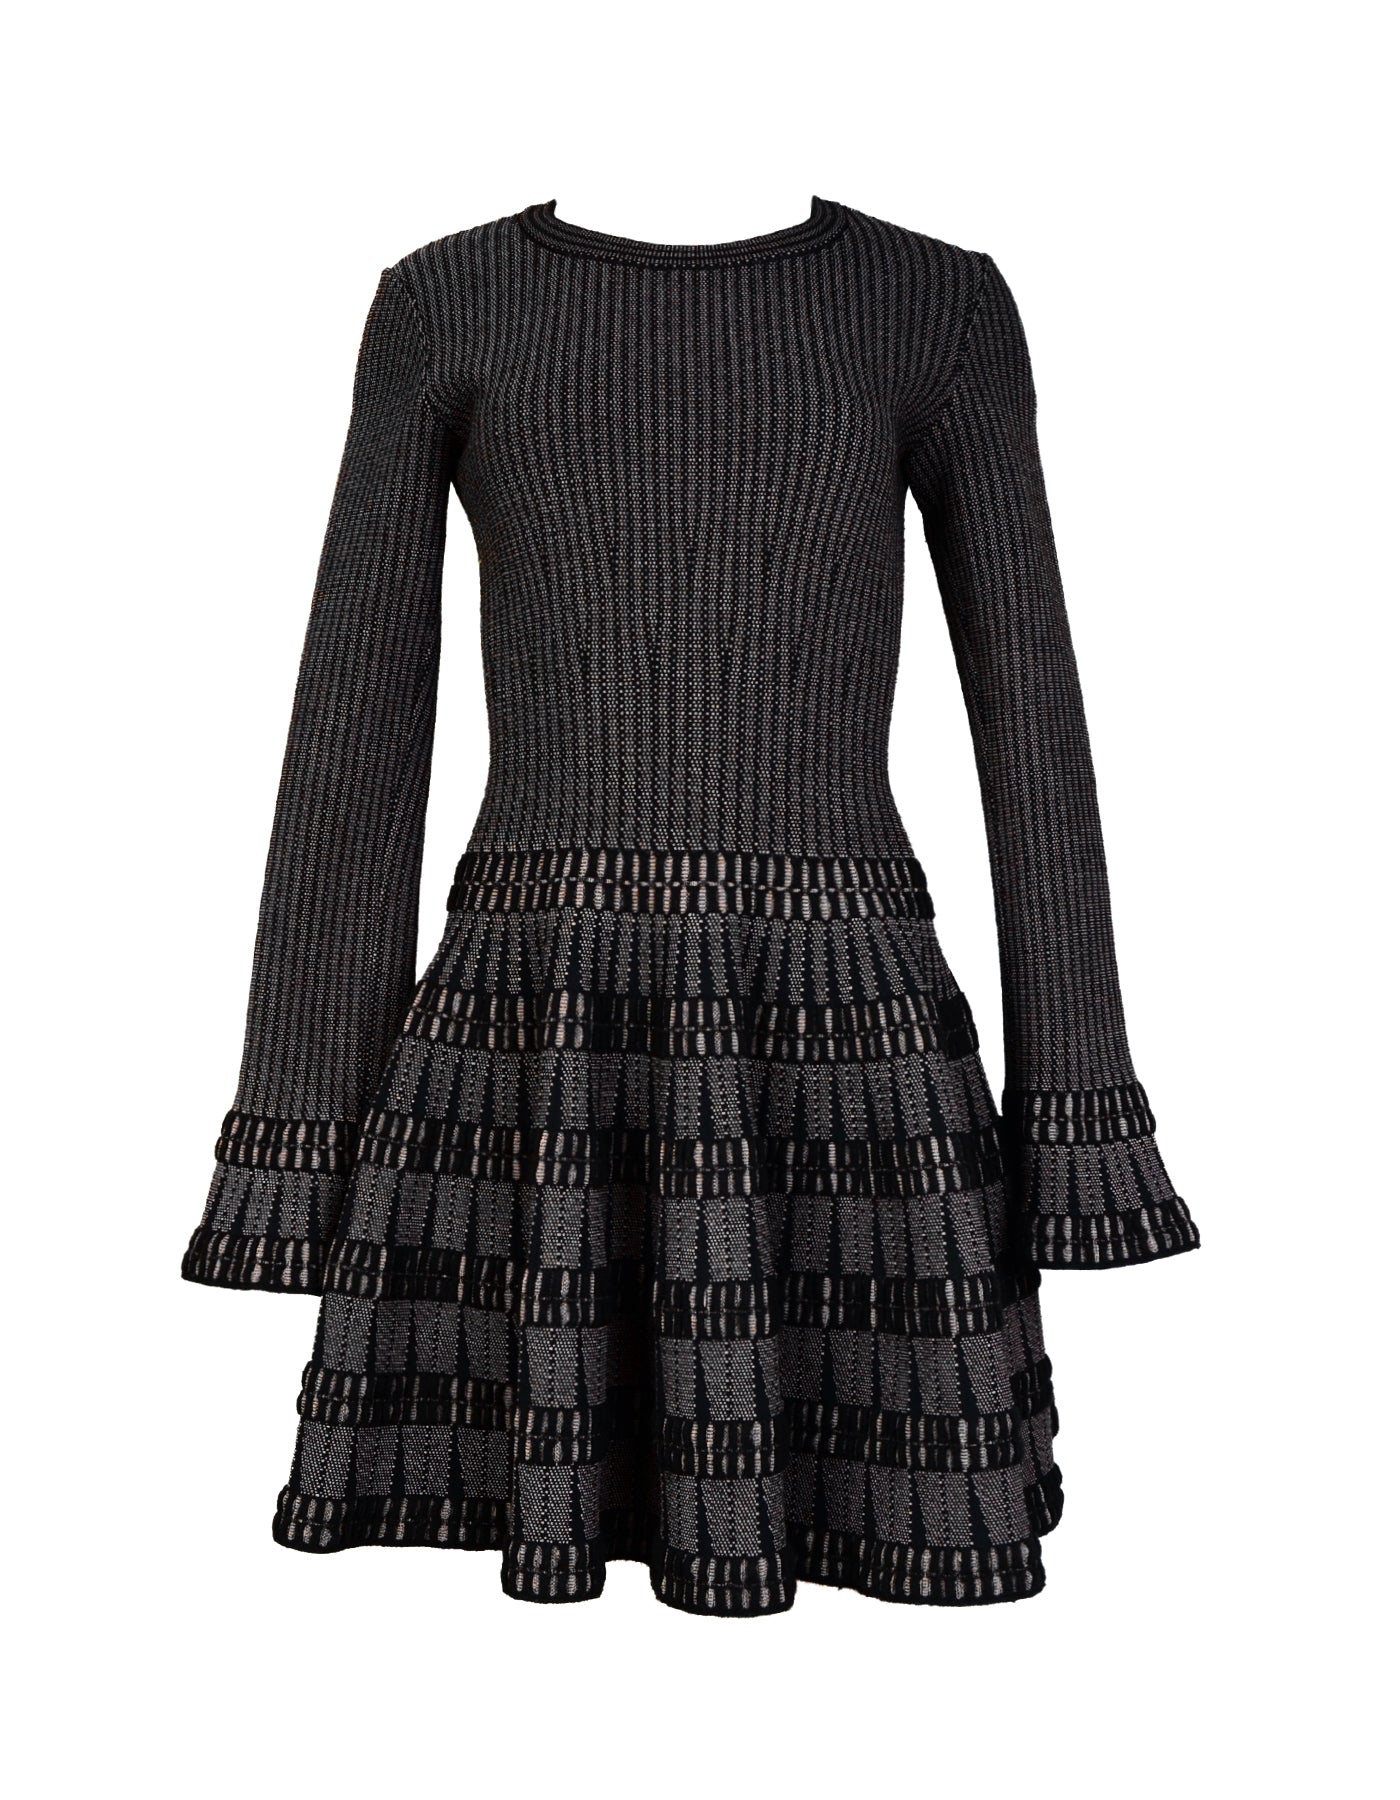 Alaia Black & Beige Fit & Flare Dress Sz FR40